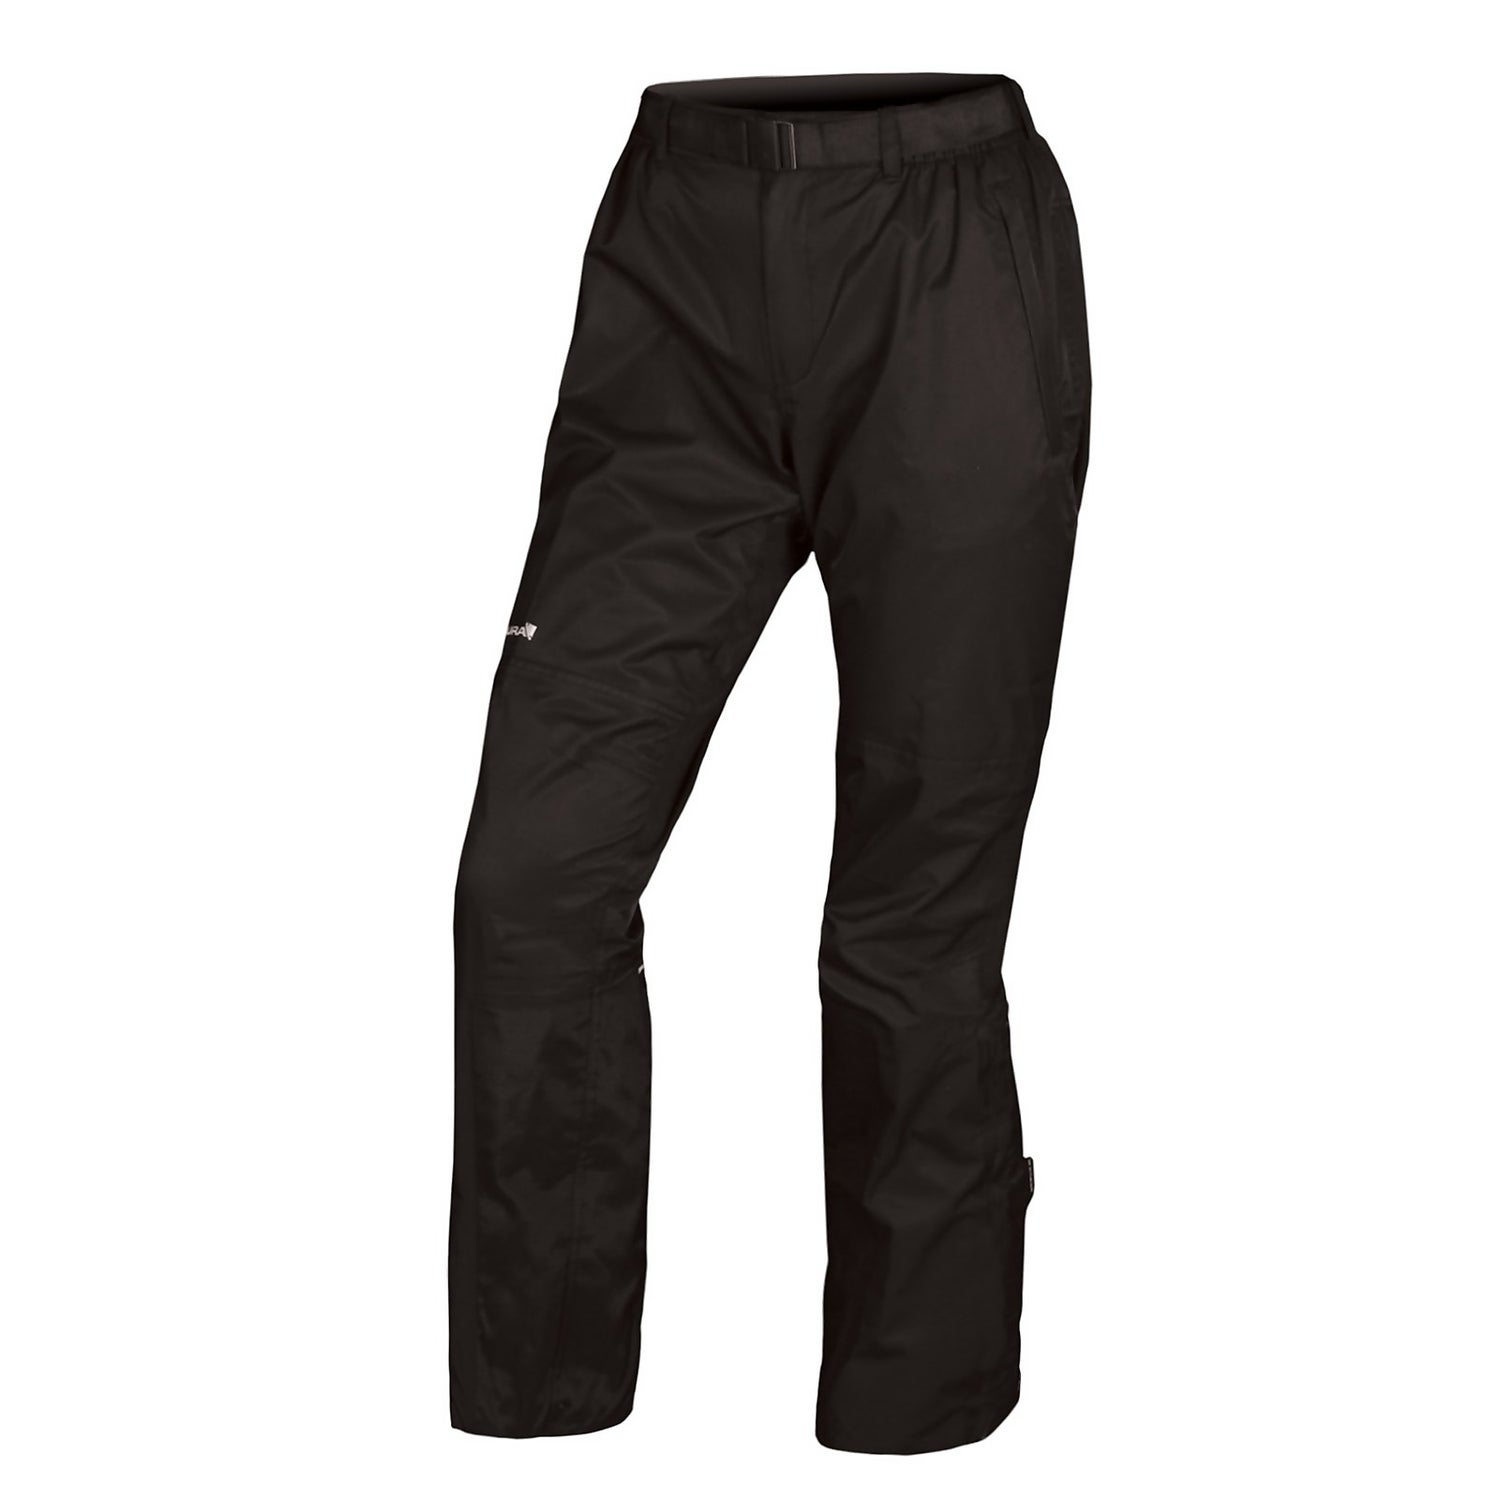 Women's Gridlock II Trouser - Black - XS